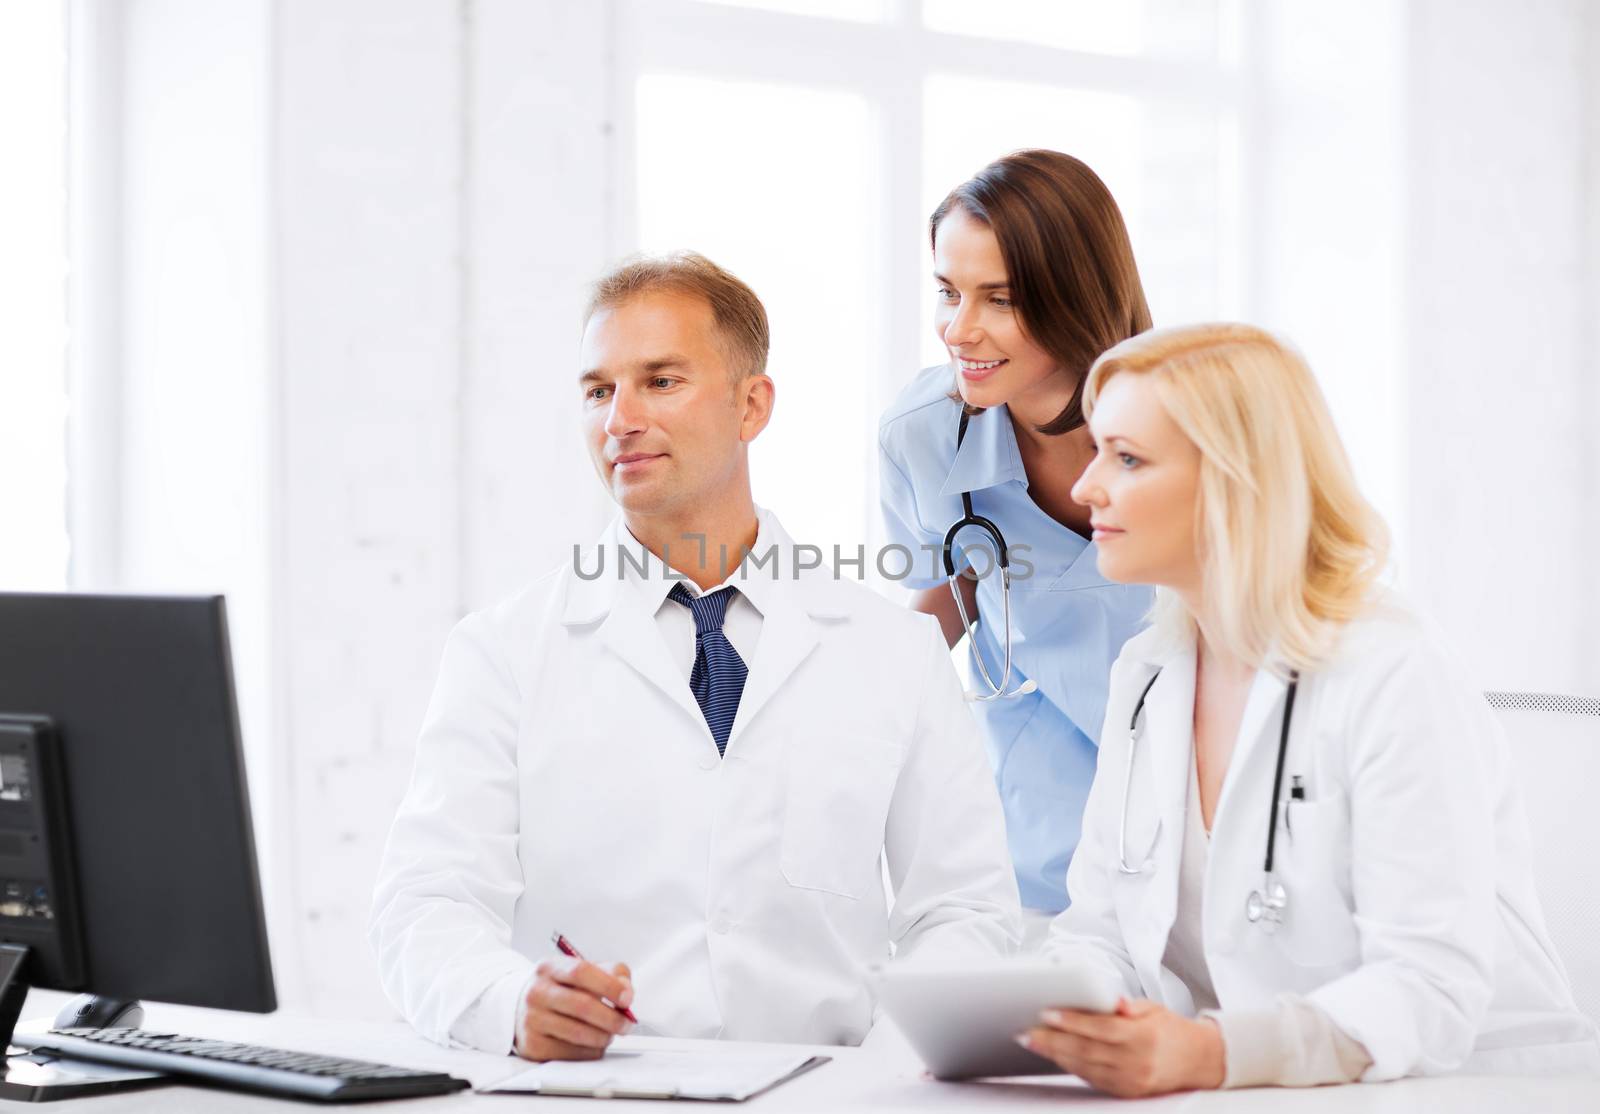 doctors looking at computer on meeting by dolgachov